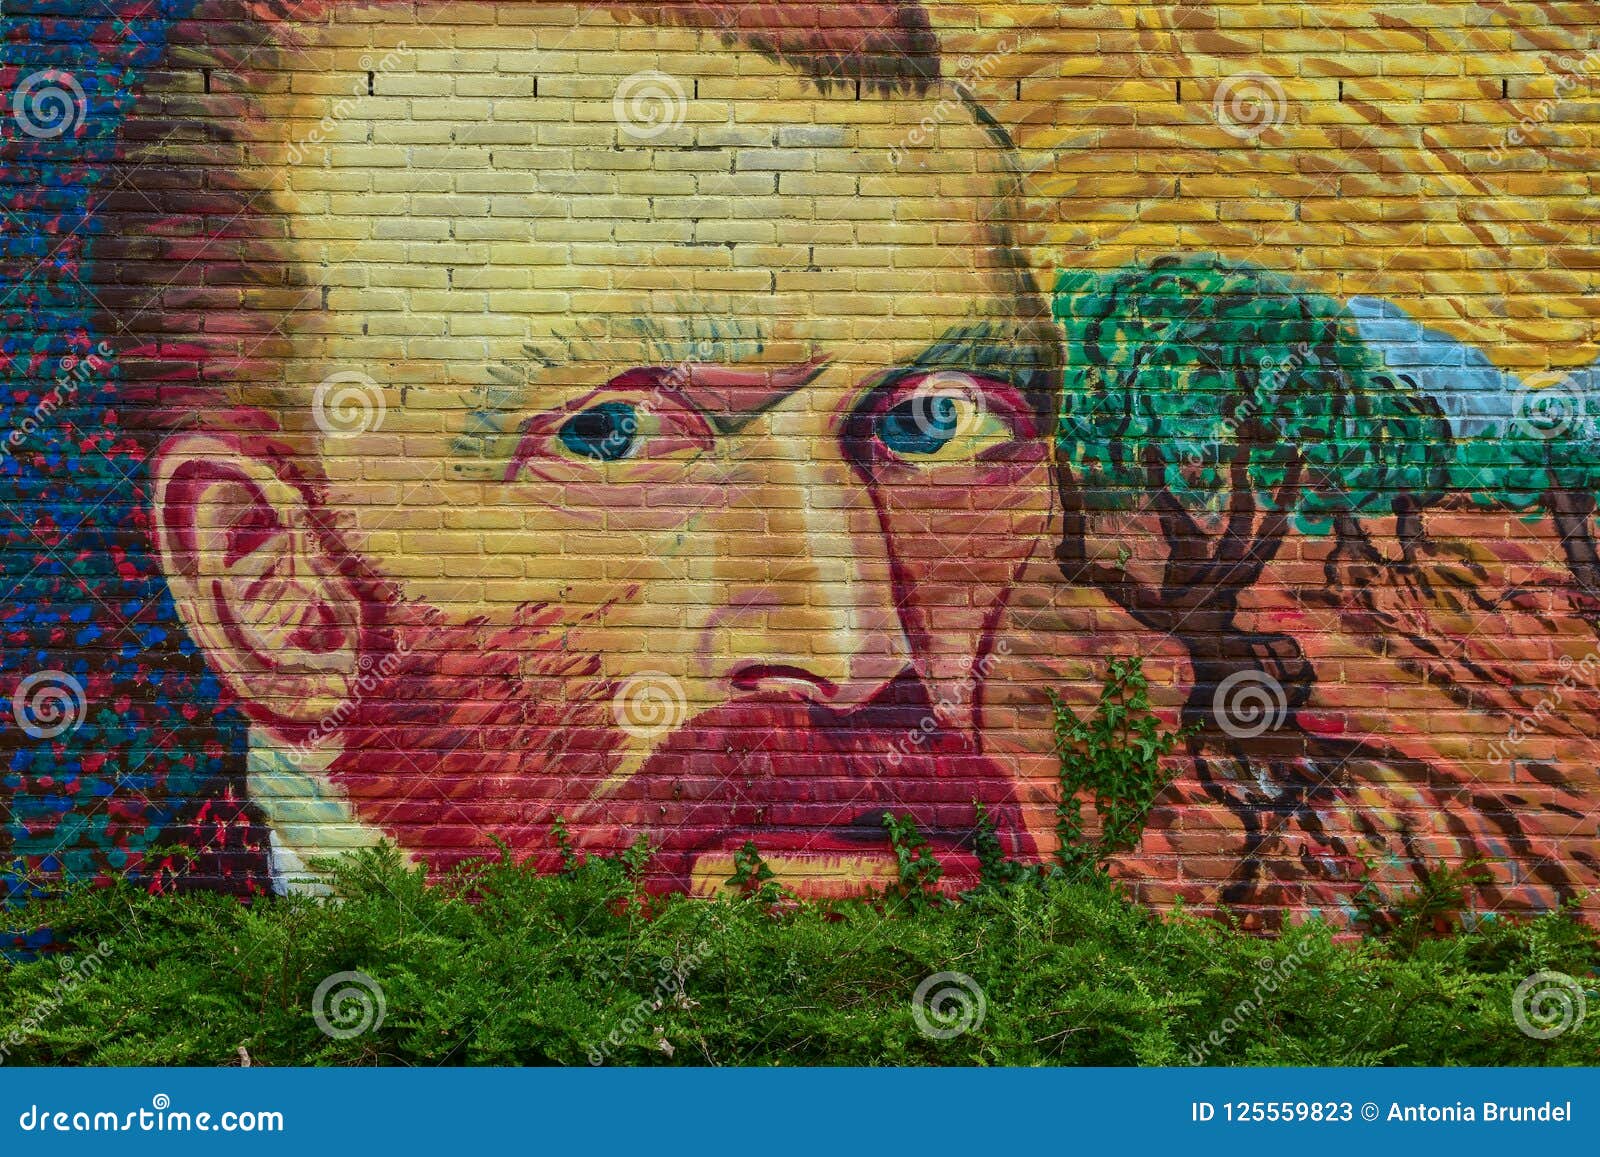 Vincent Van Gogh Street Art Self Portrait Painted on a Brick Wall